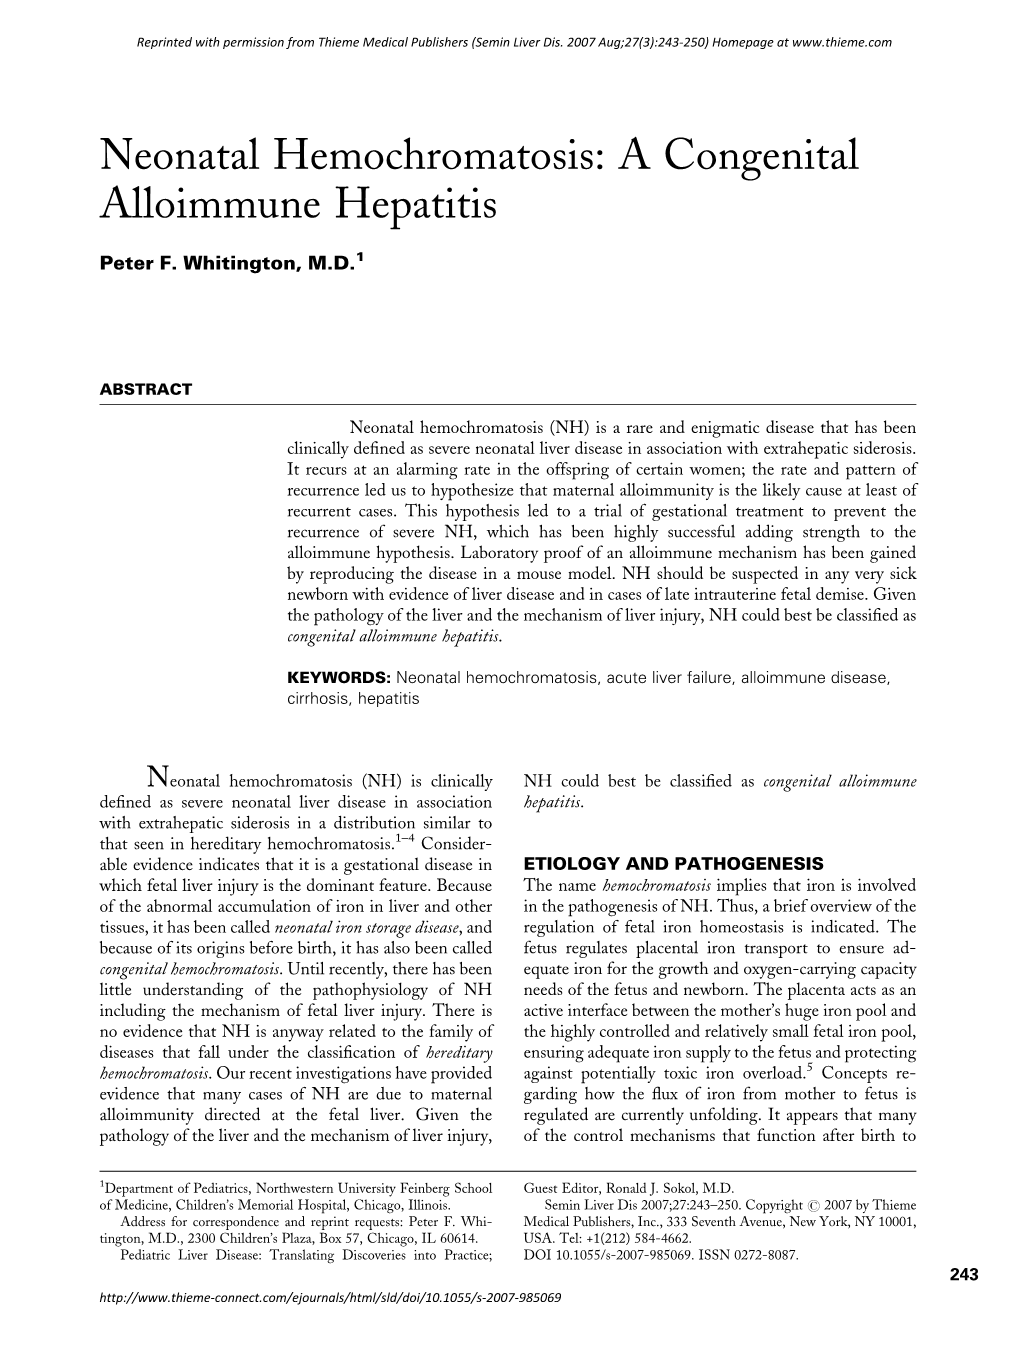 Neonatal Hemochromatosis: a Congenital Alloimmune Hepatitis